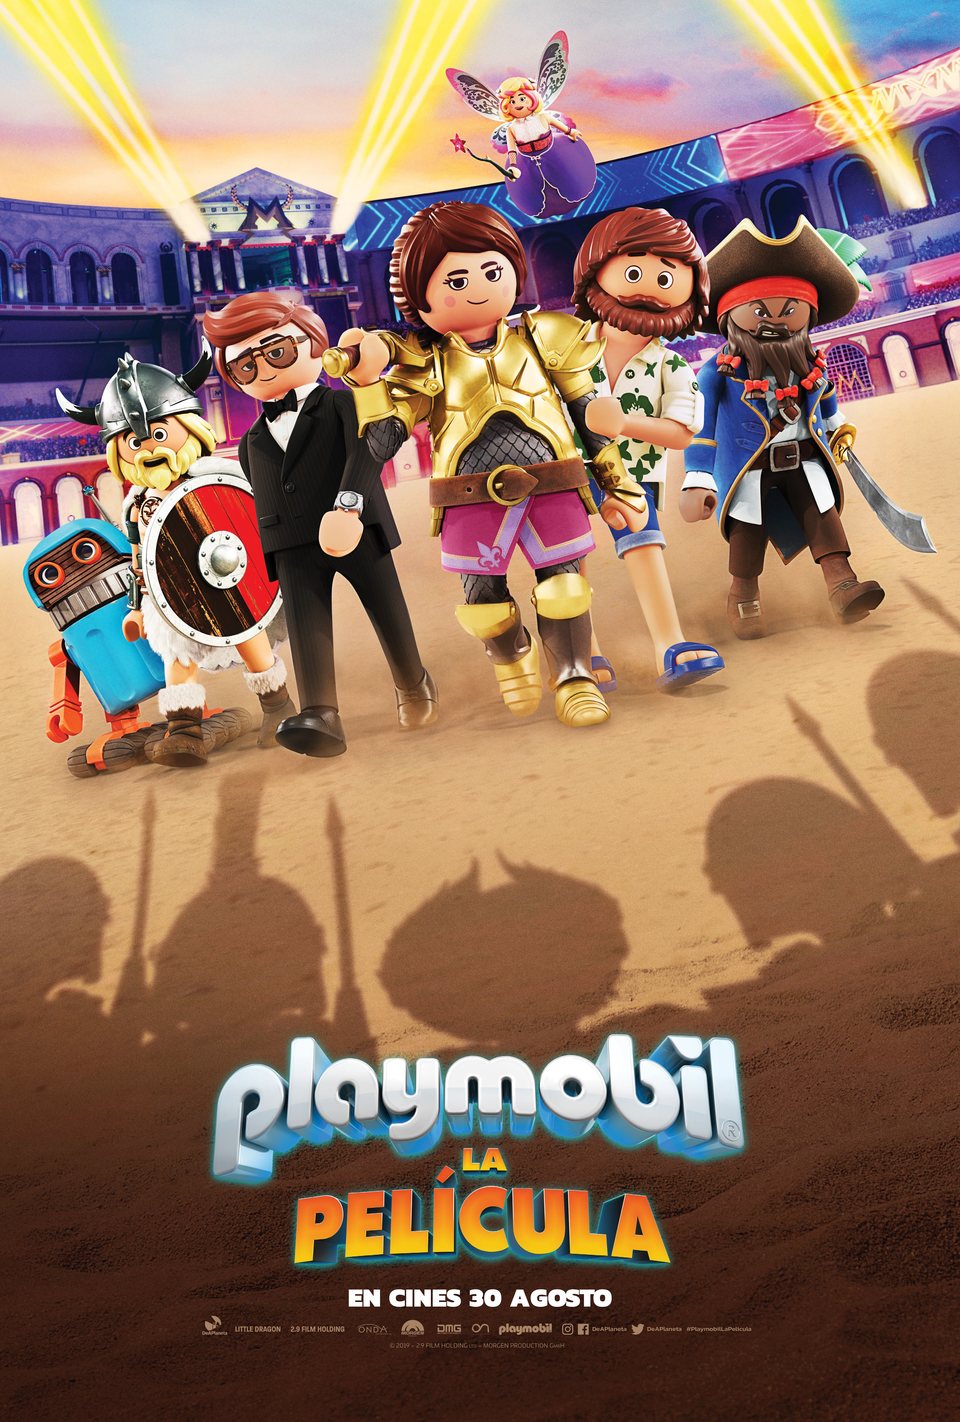 Cartel de Playmobil: la Película - Póster español 'Playmobil: La película'